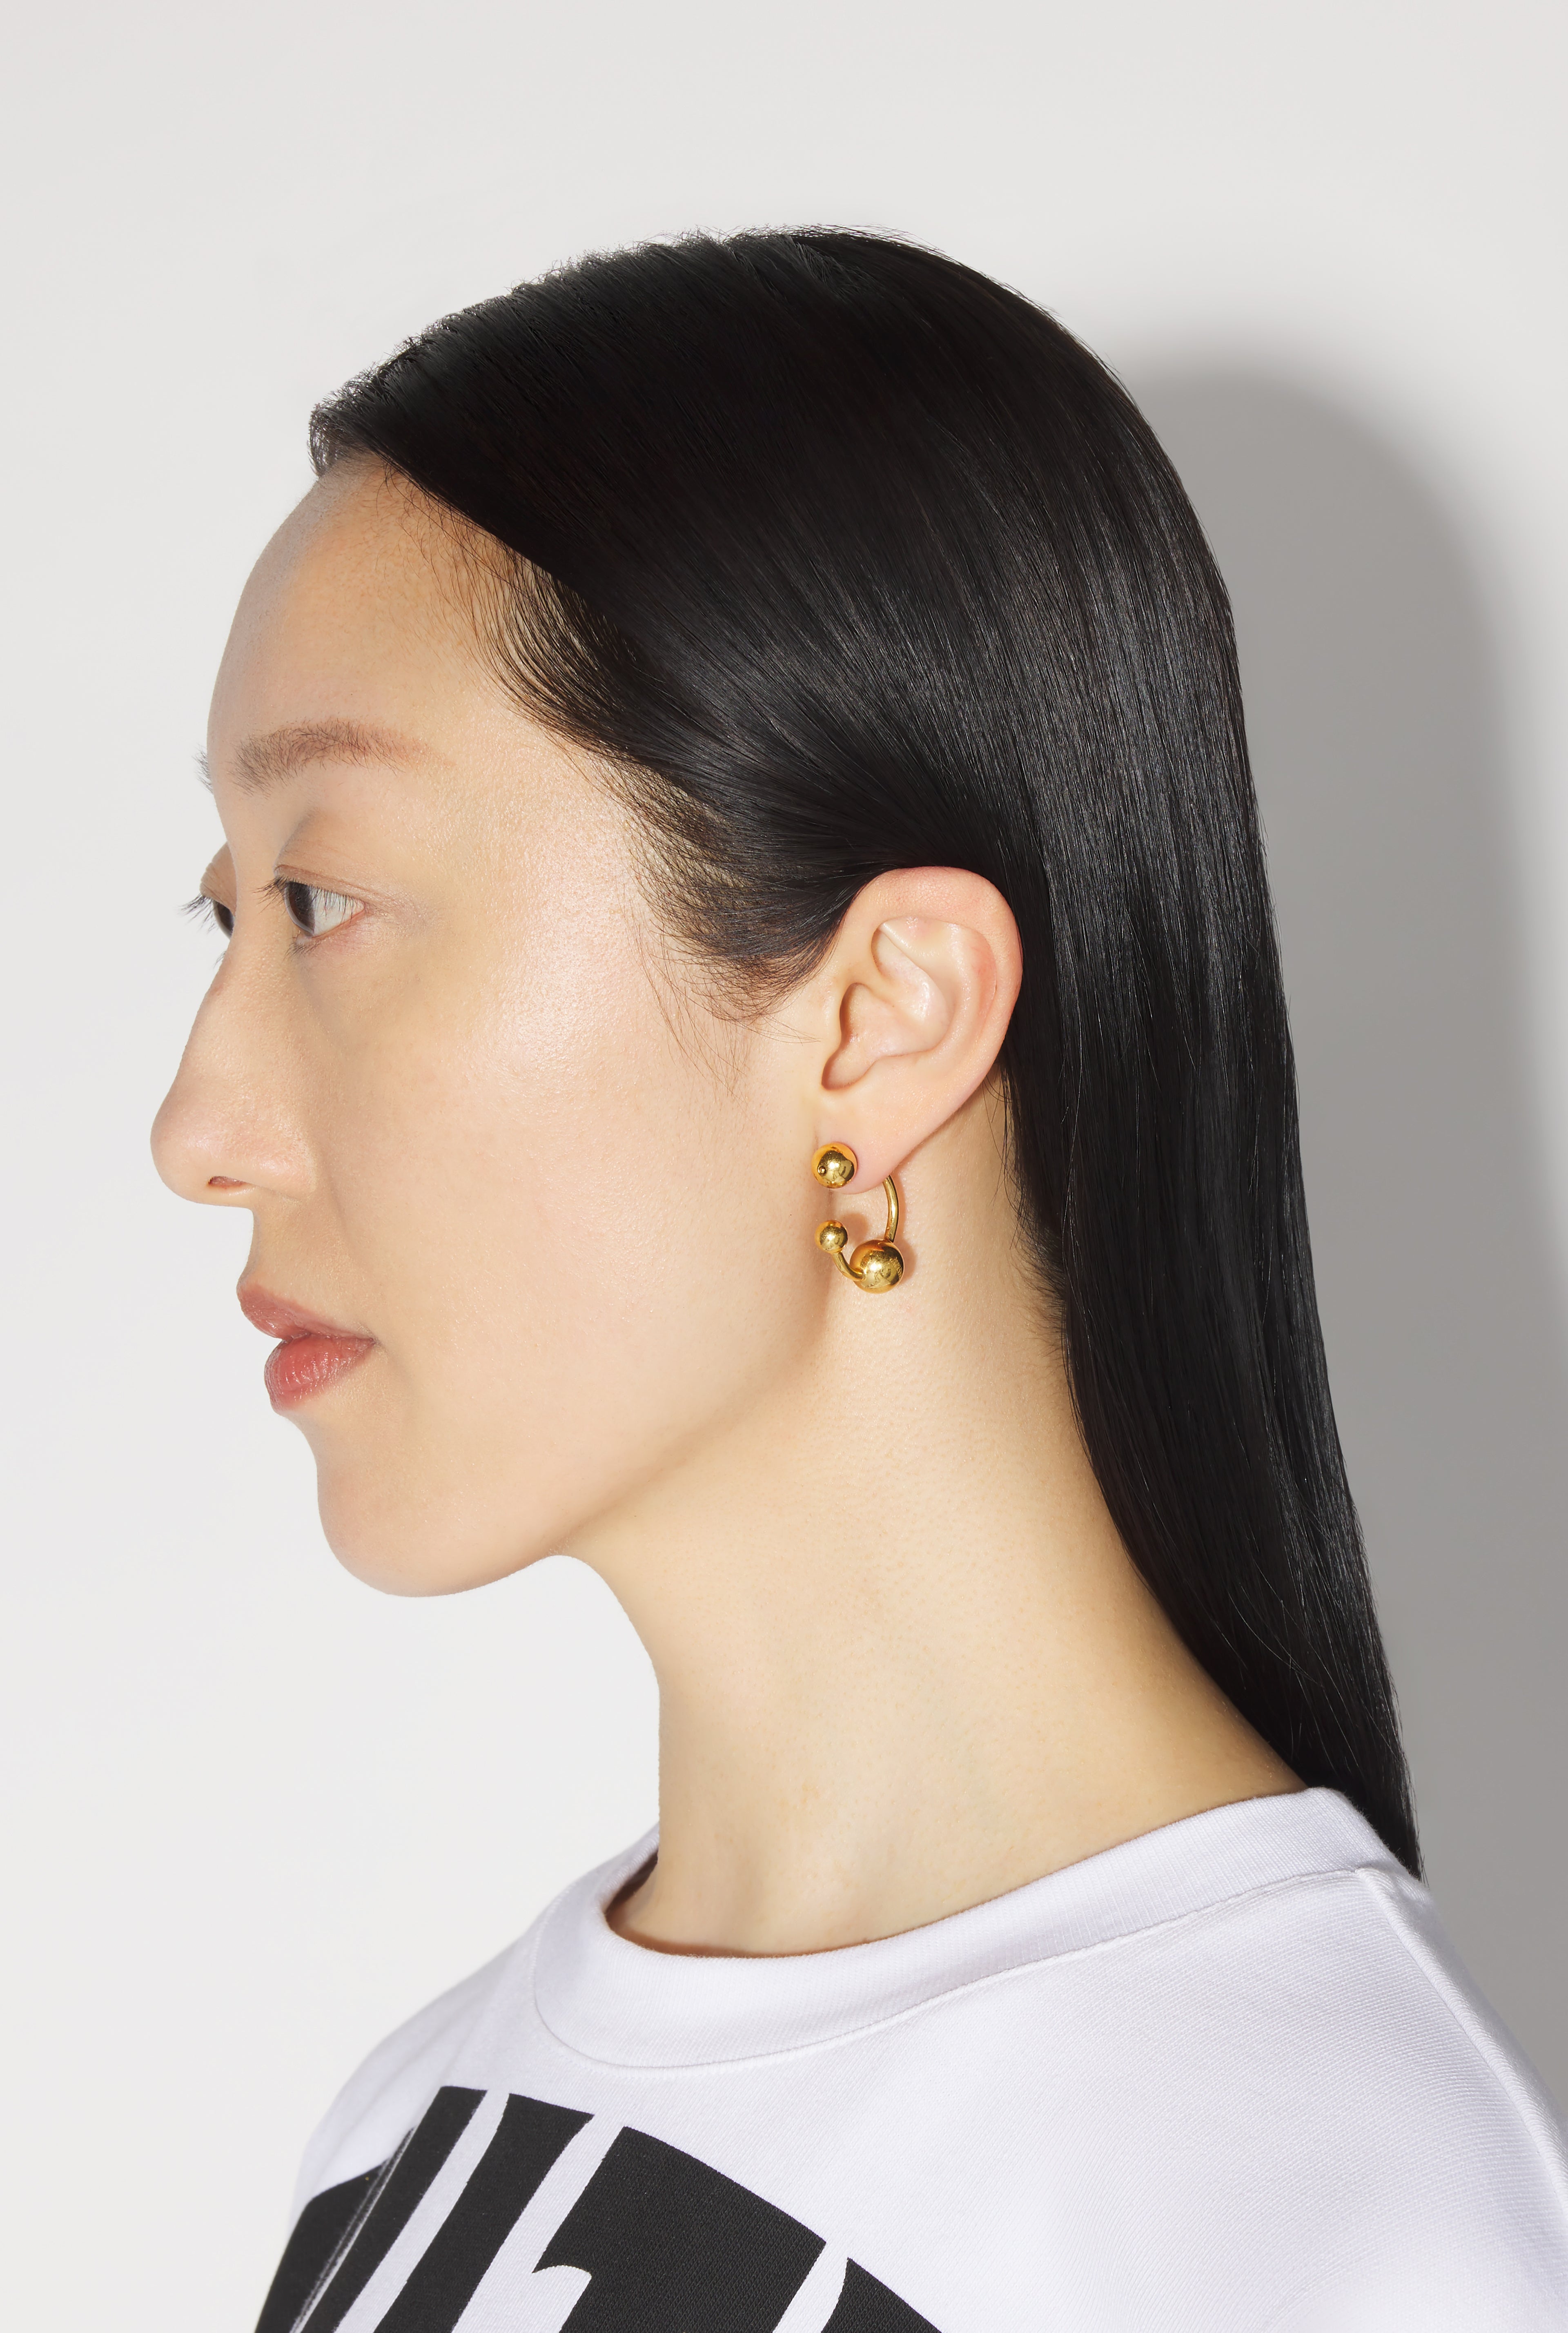 The Gold-Tone Piercing Earrings